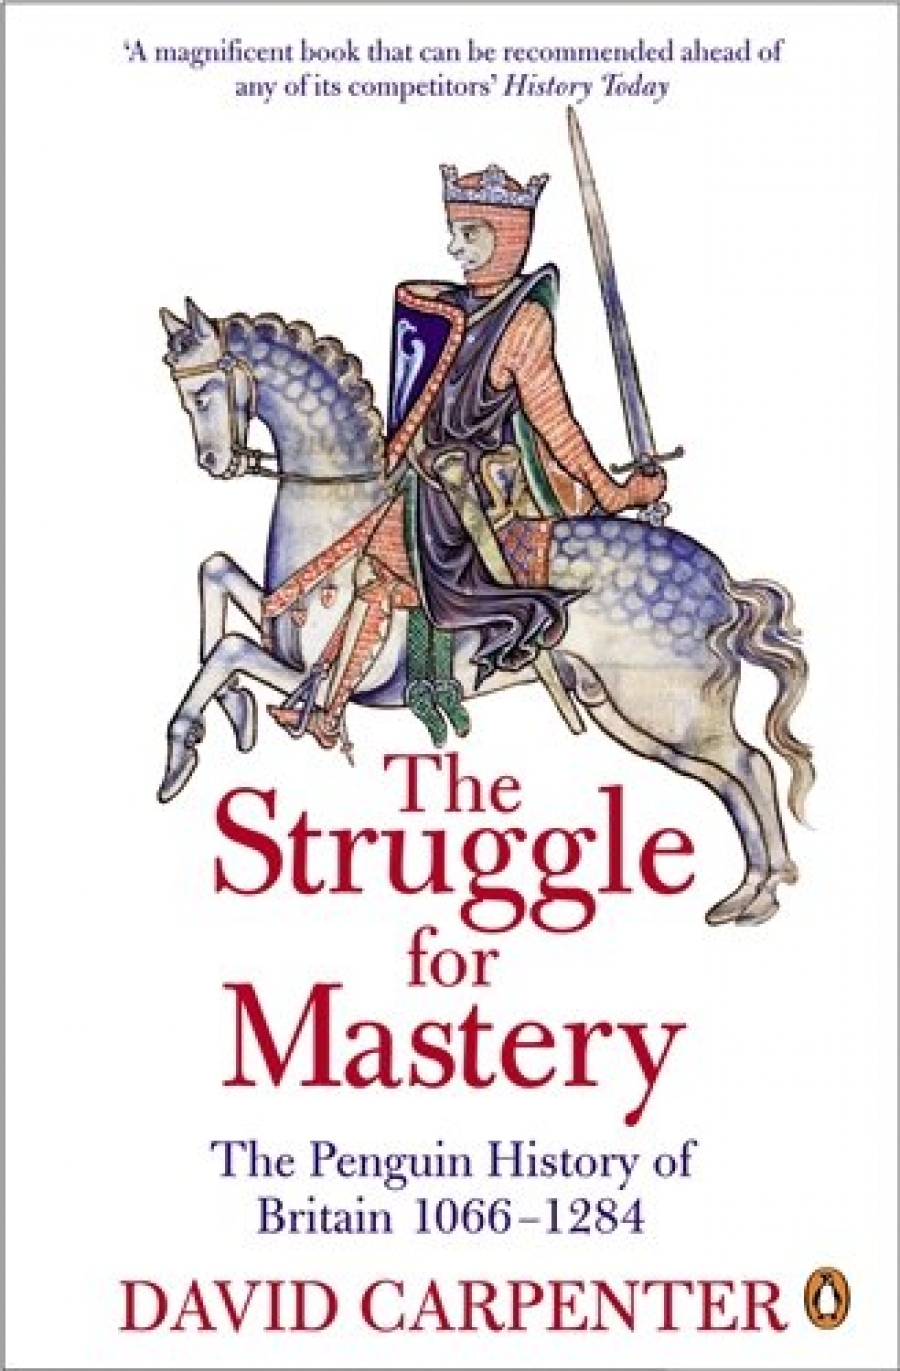 Carpenter, David Penguin History of Britain: The Struggle for Mastery: Britain 1066-1284 